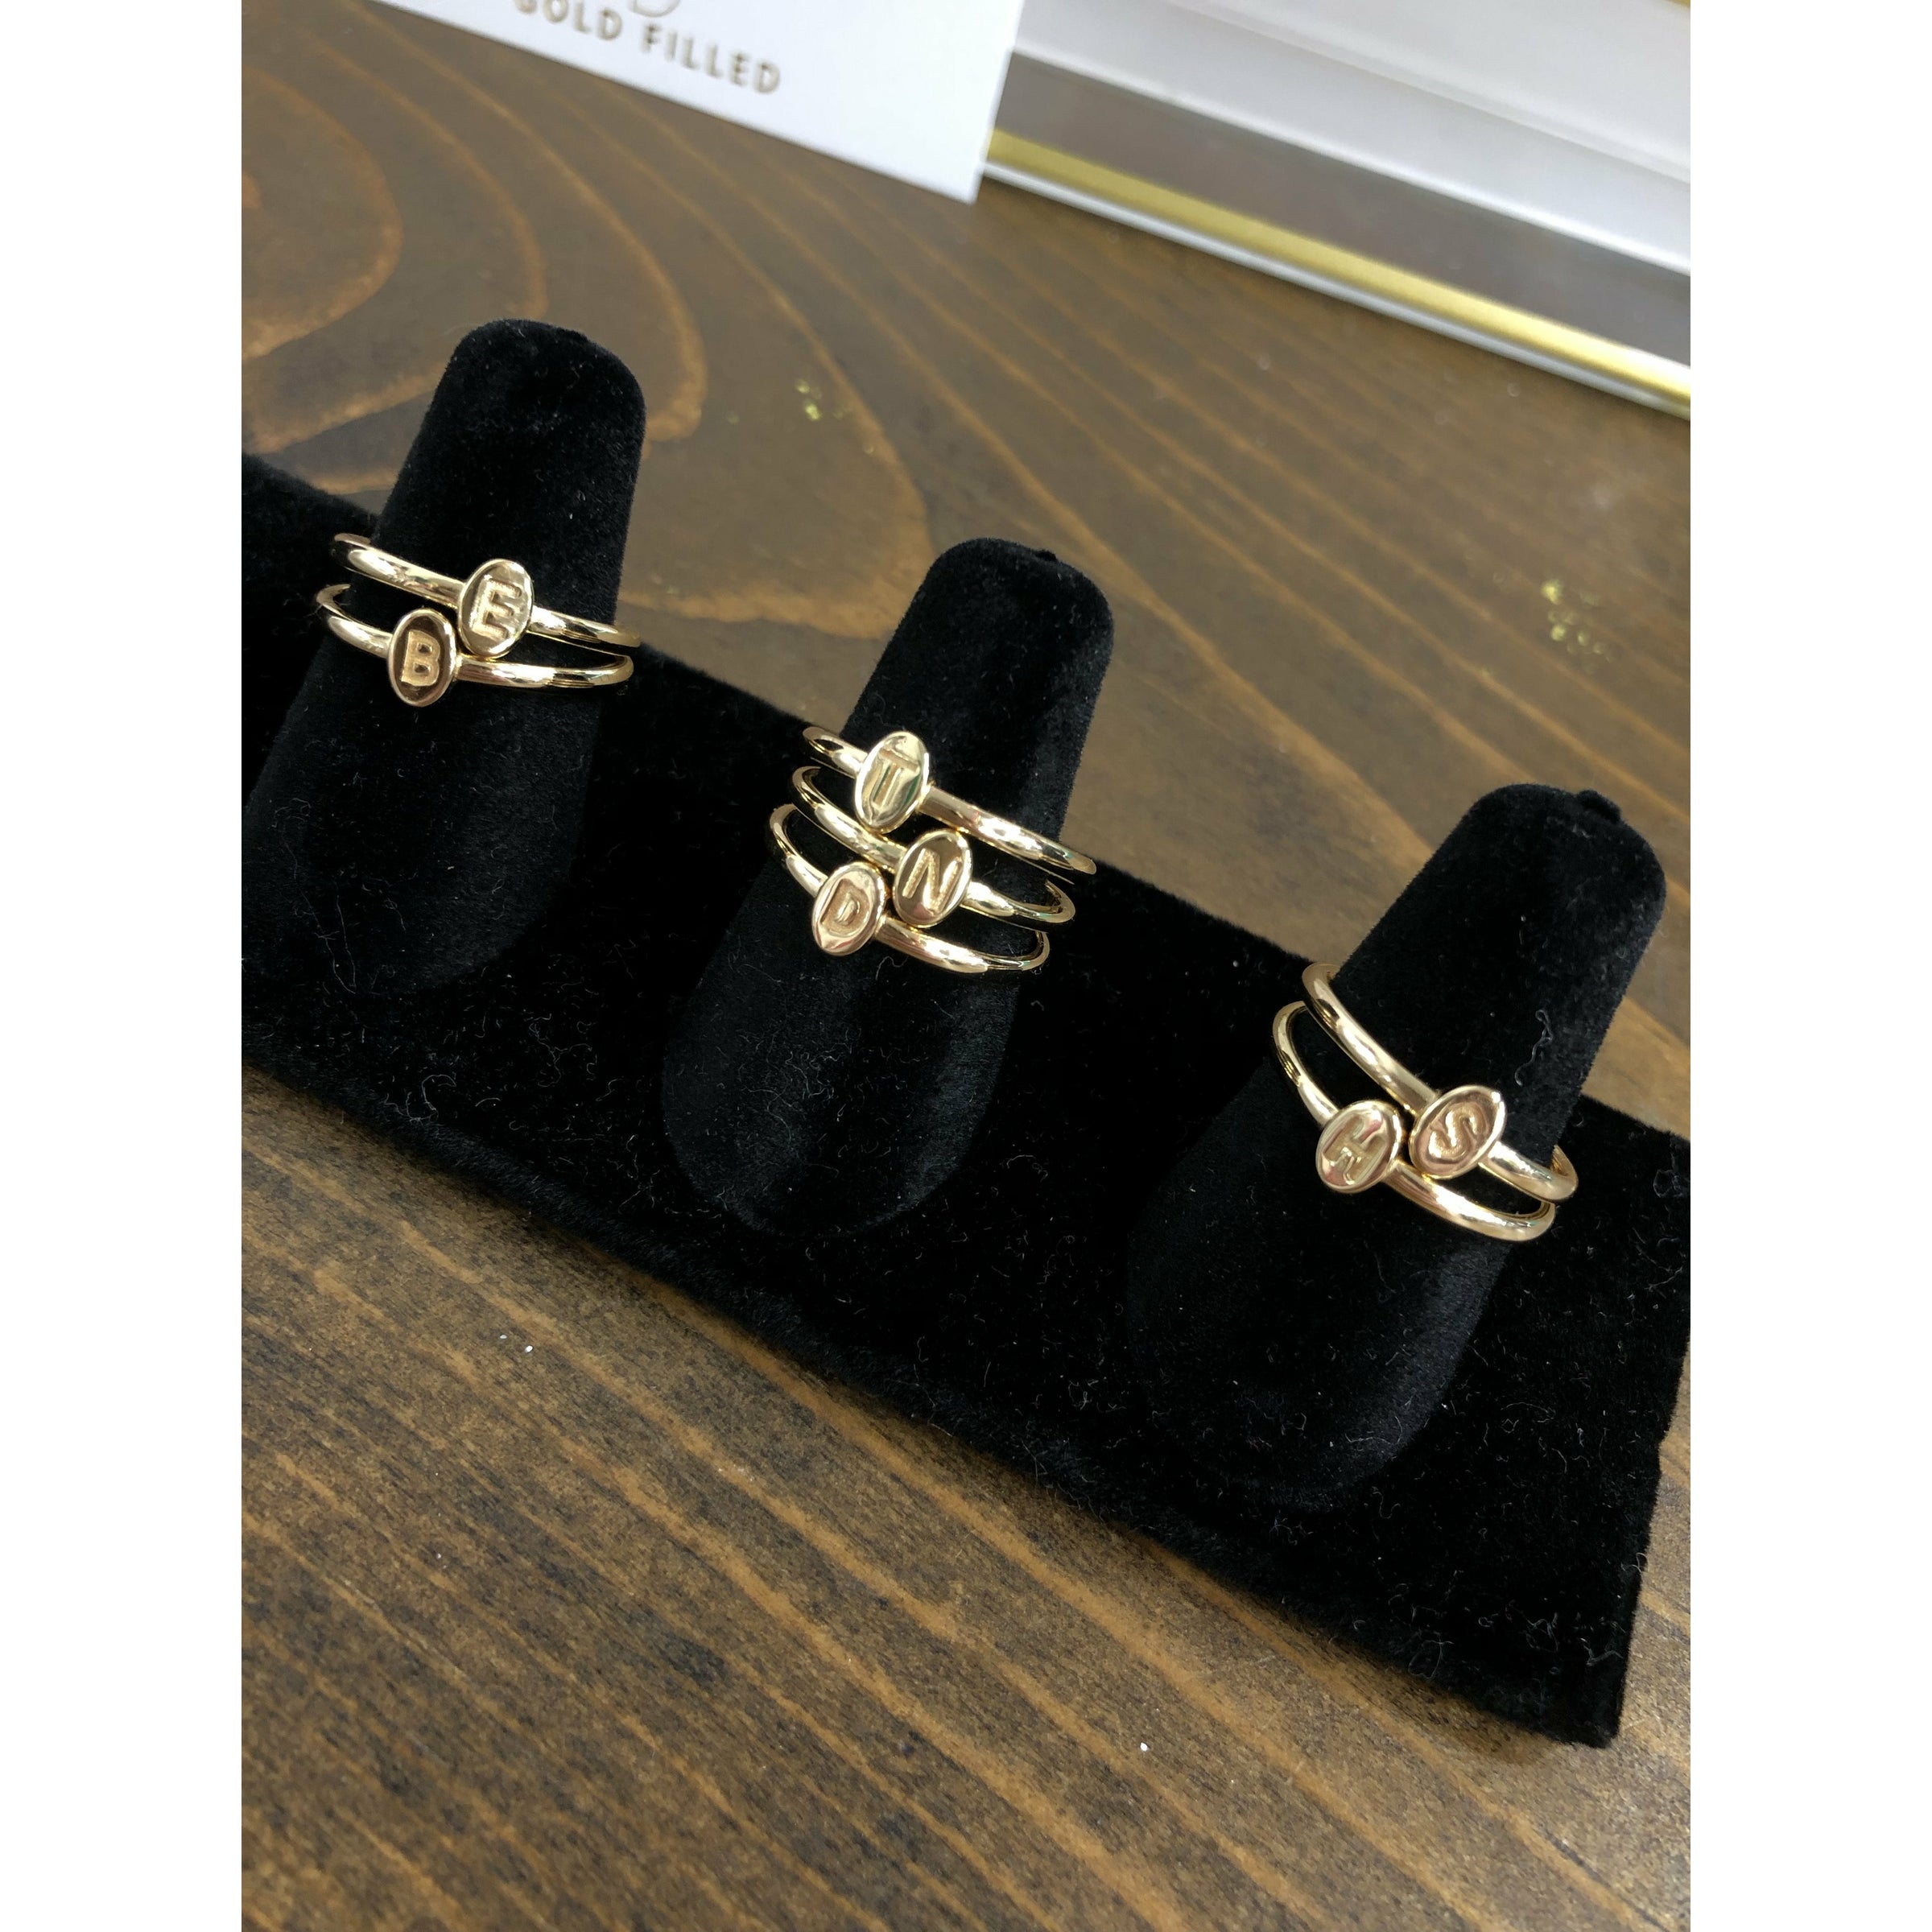 kinsey designs | mini initial ring